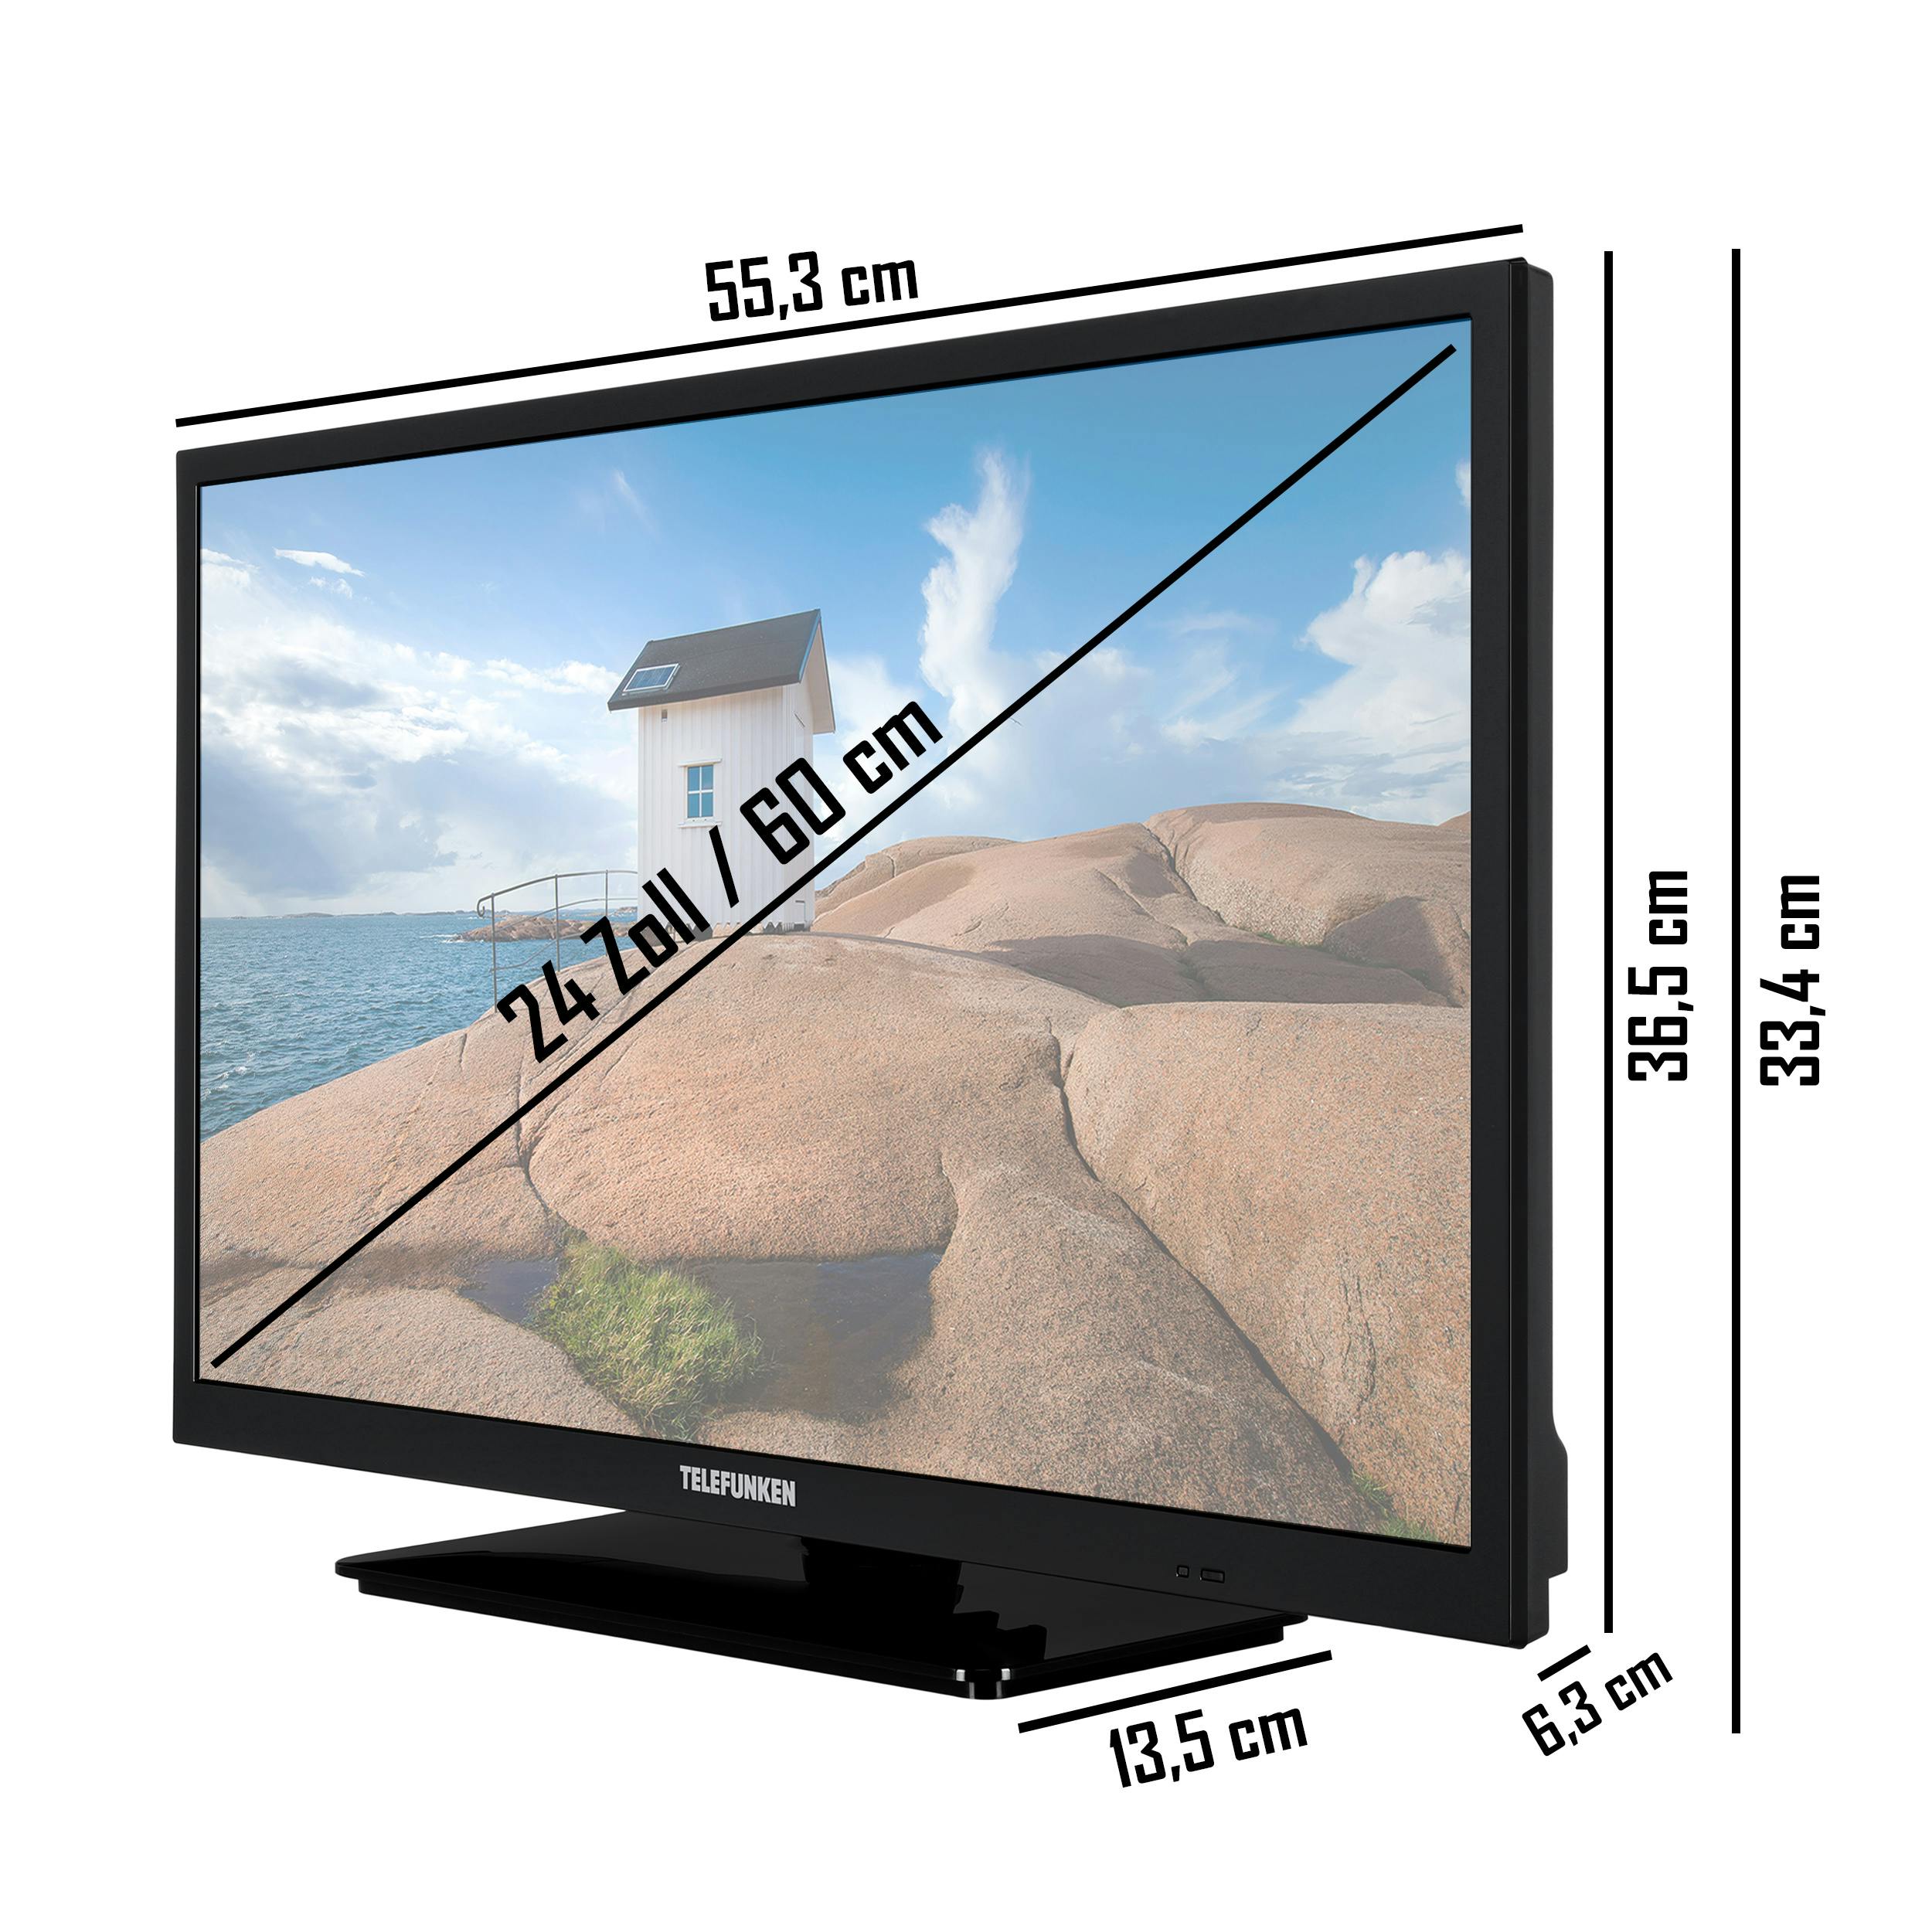 Telefunken XH24SN550MV 24 Zoll Fernseher / Smart TV (HD Ready, HDR, 12  Volt) - 6 Monate HD+ inkl. | METRO Marktplatz